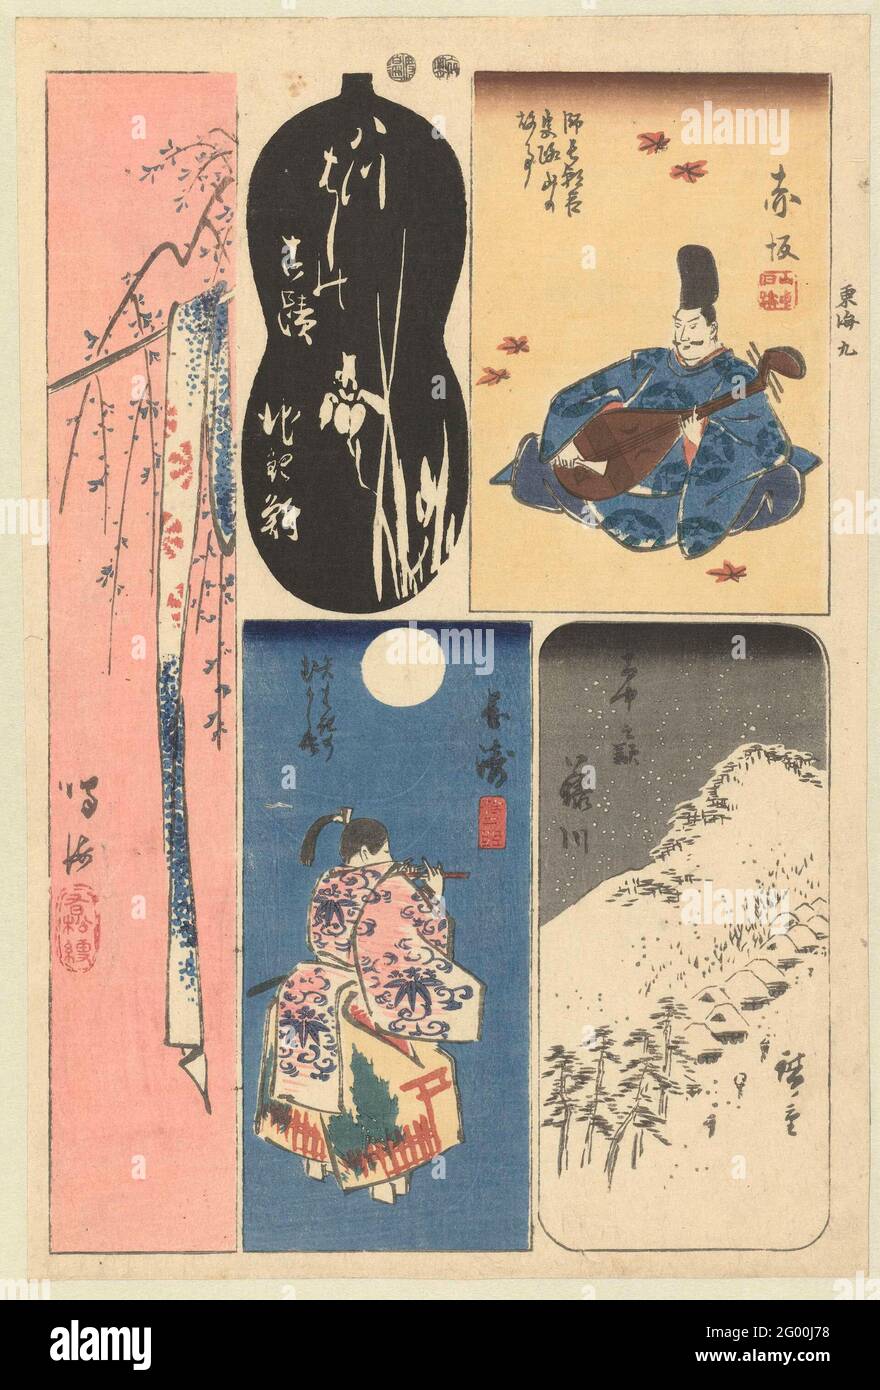 Number nine of the Tokaido; Tokai Kyu; Clipping tables of the Tokaido; Tokaido Harimaze Zue. Harimaze with five small prints referring to stations of the Tokaido. Akasaka: The poet Morinaga Ason his lute closed; Chiniyu: balebasked print with image of irises; Narumi: textile drying at a willow; Okazaki: Yoshitsune at full moon have been flute; Fujikawa: Bergdorp in evening snow. Stock Photo